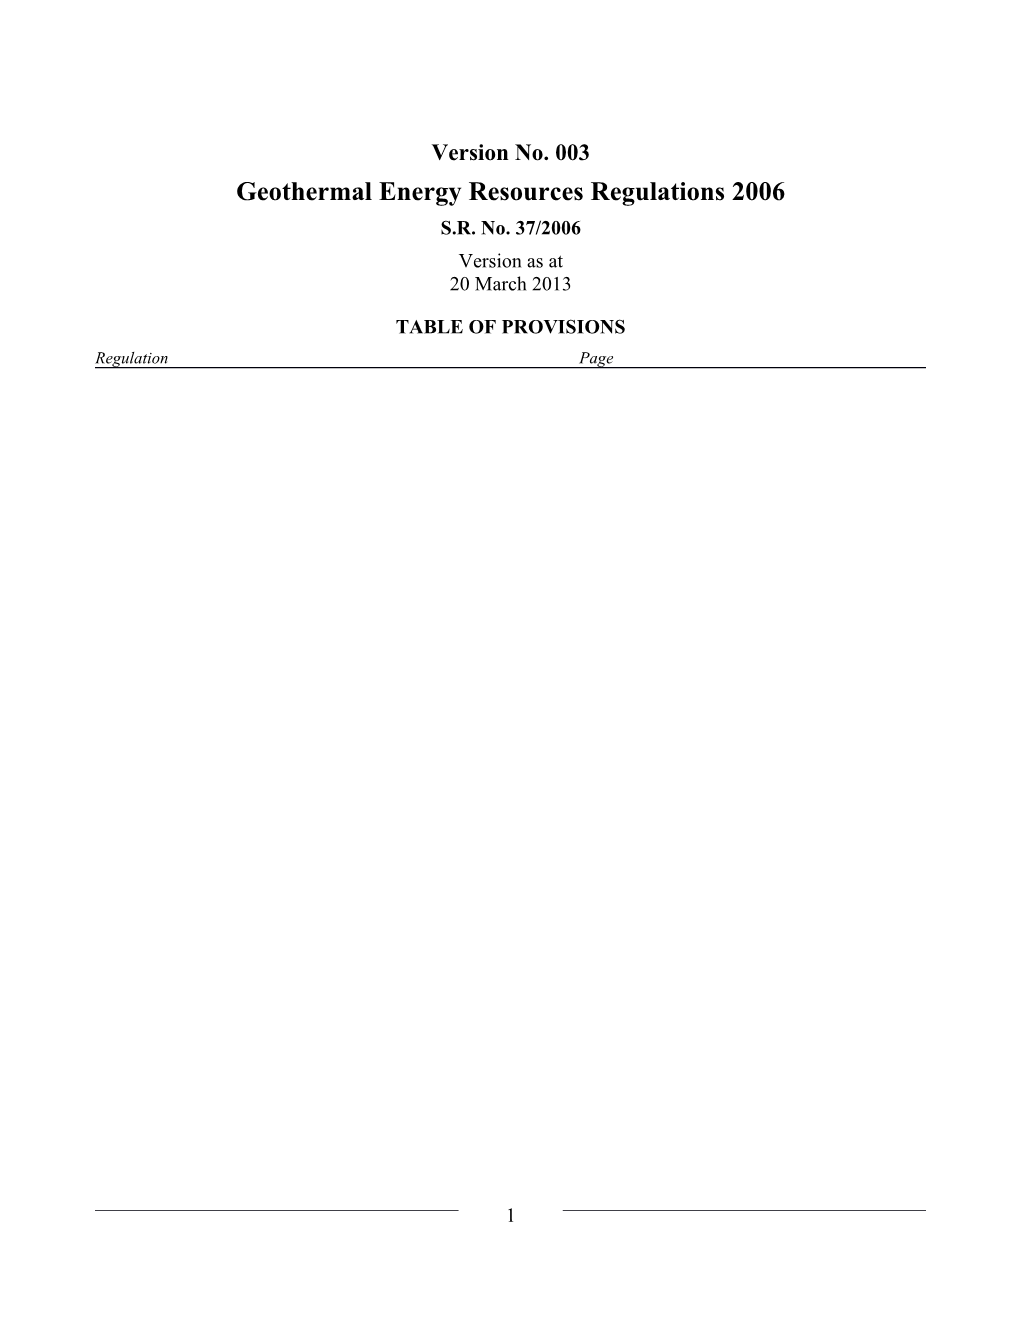 Geothermal Energy Resources Regulations 2006